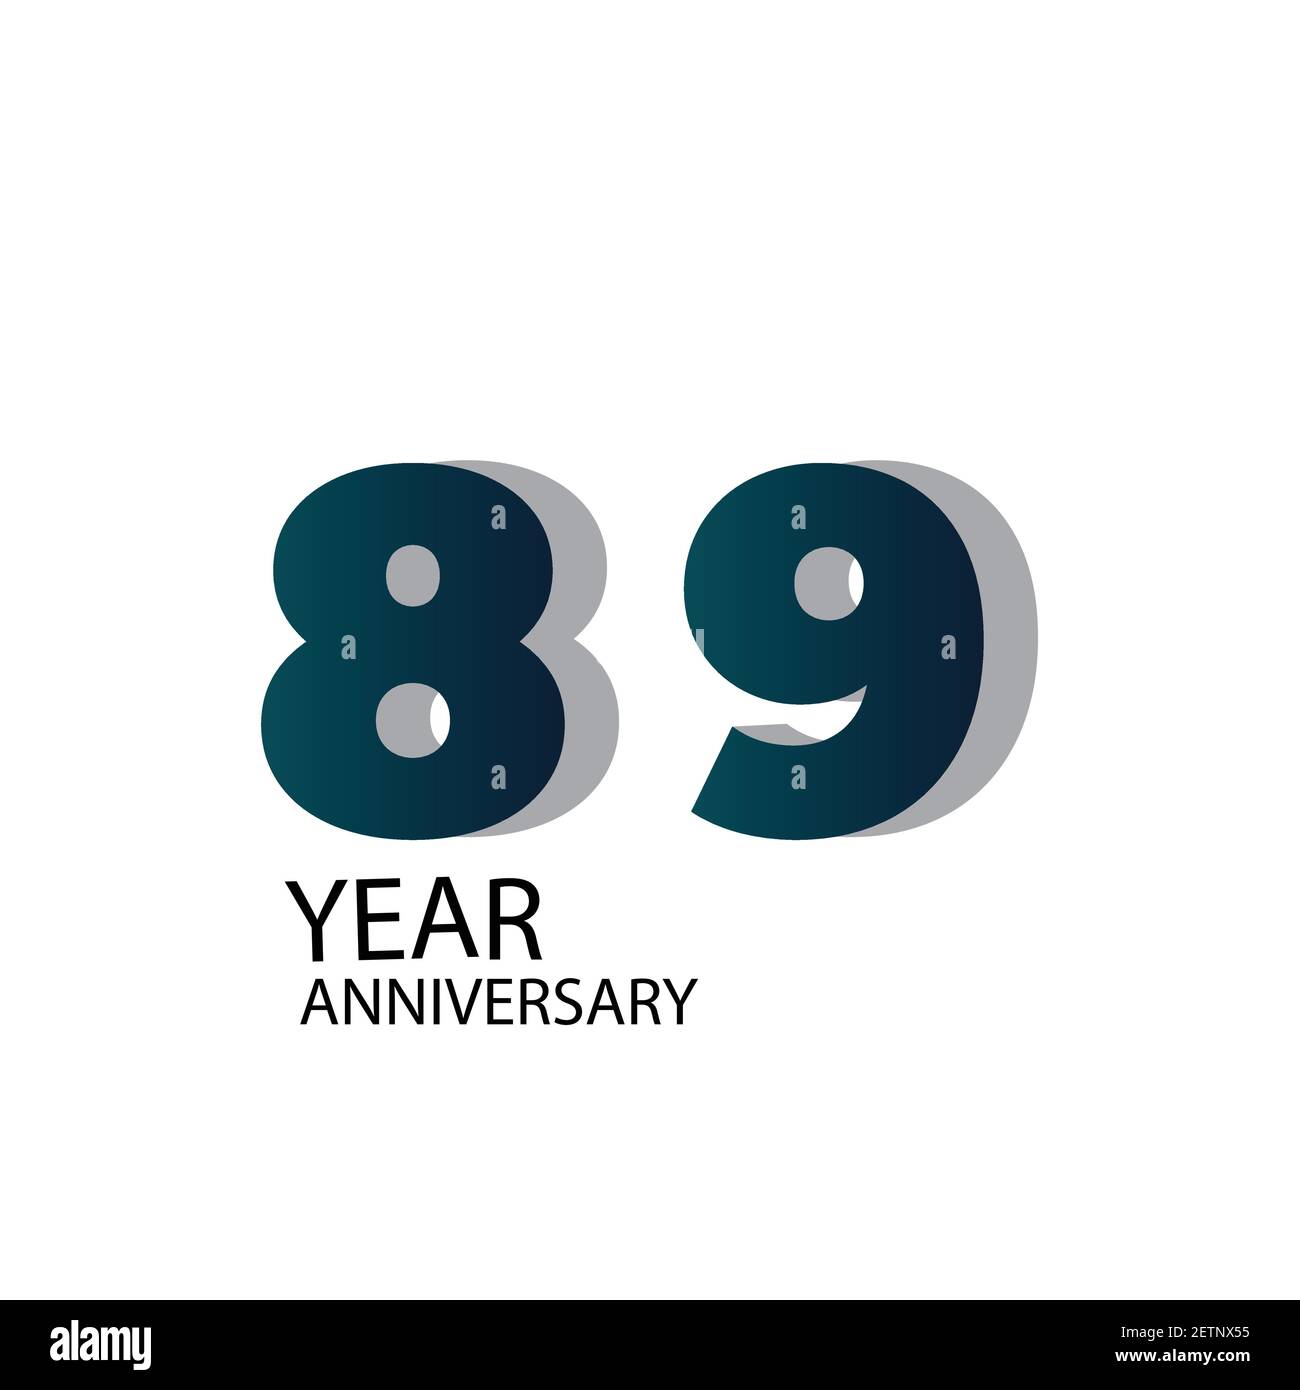 89 Year Anniversary Vector Template Design Illustration Blue Elegant White Background Stock Vector